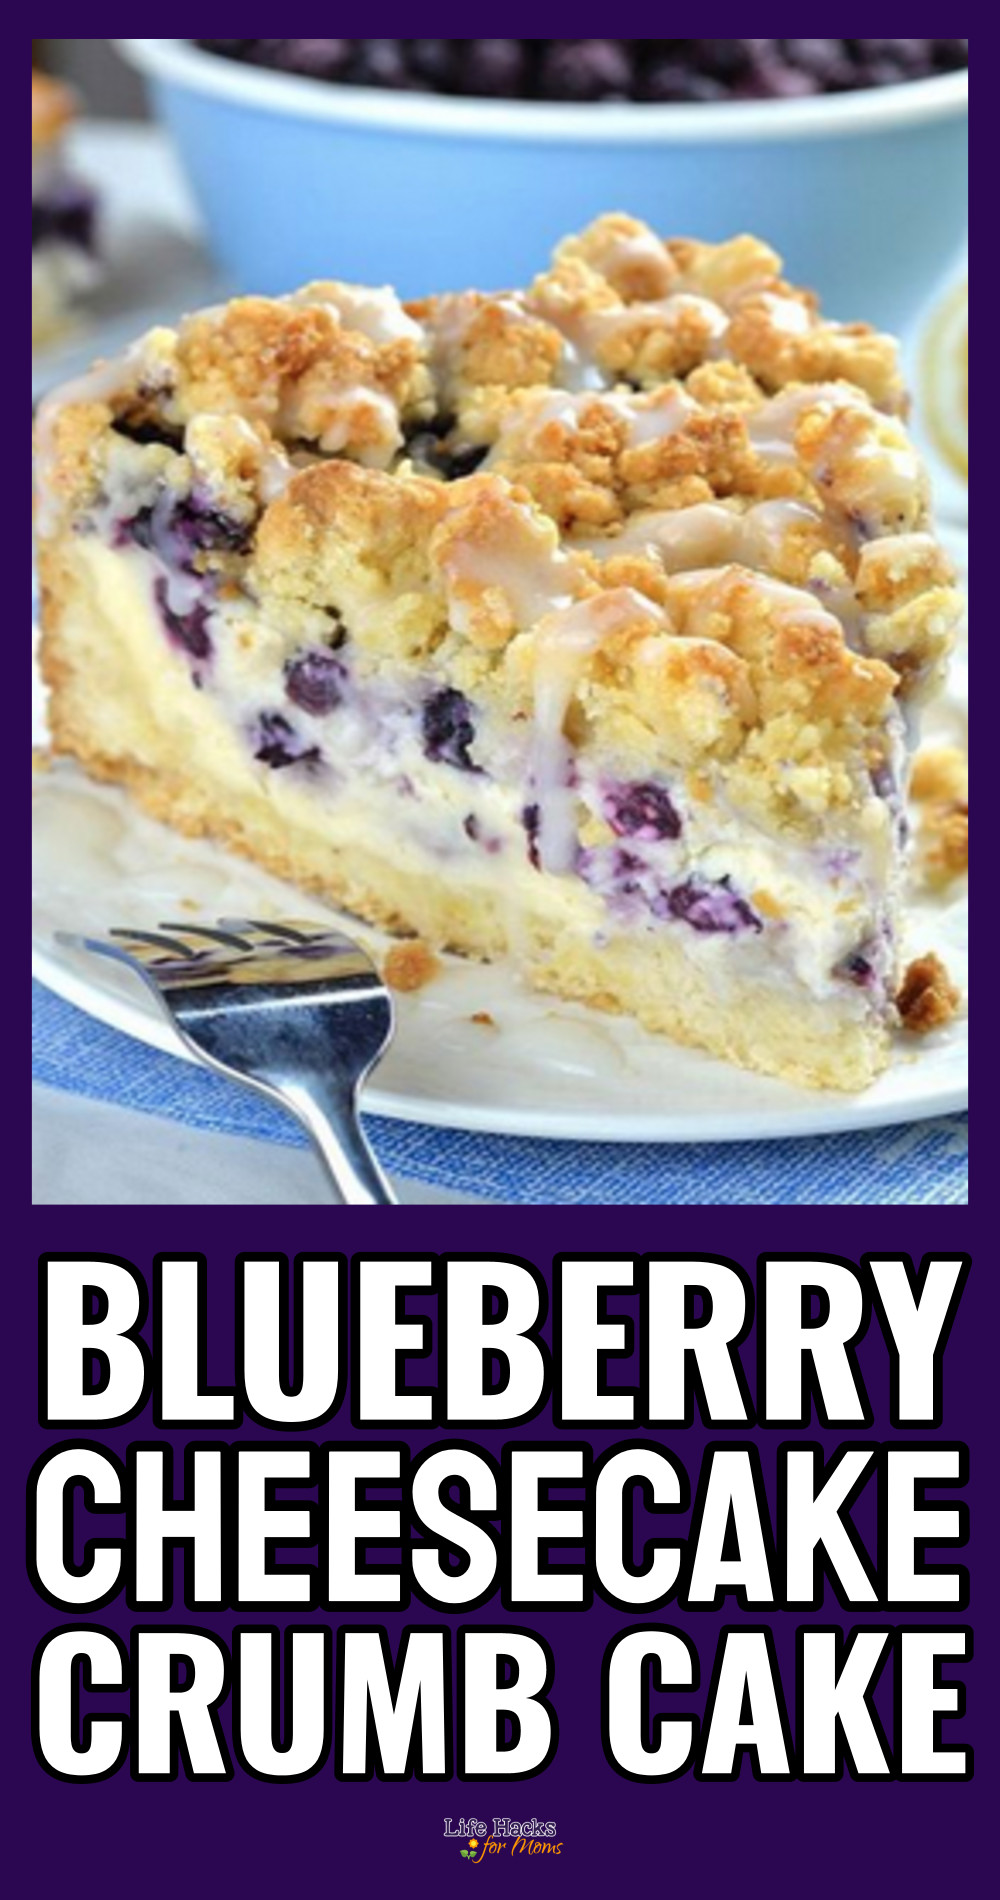 Blueberry cheesecake crumb cake recipe